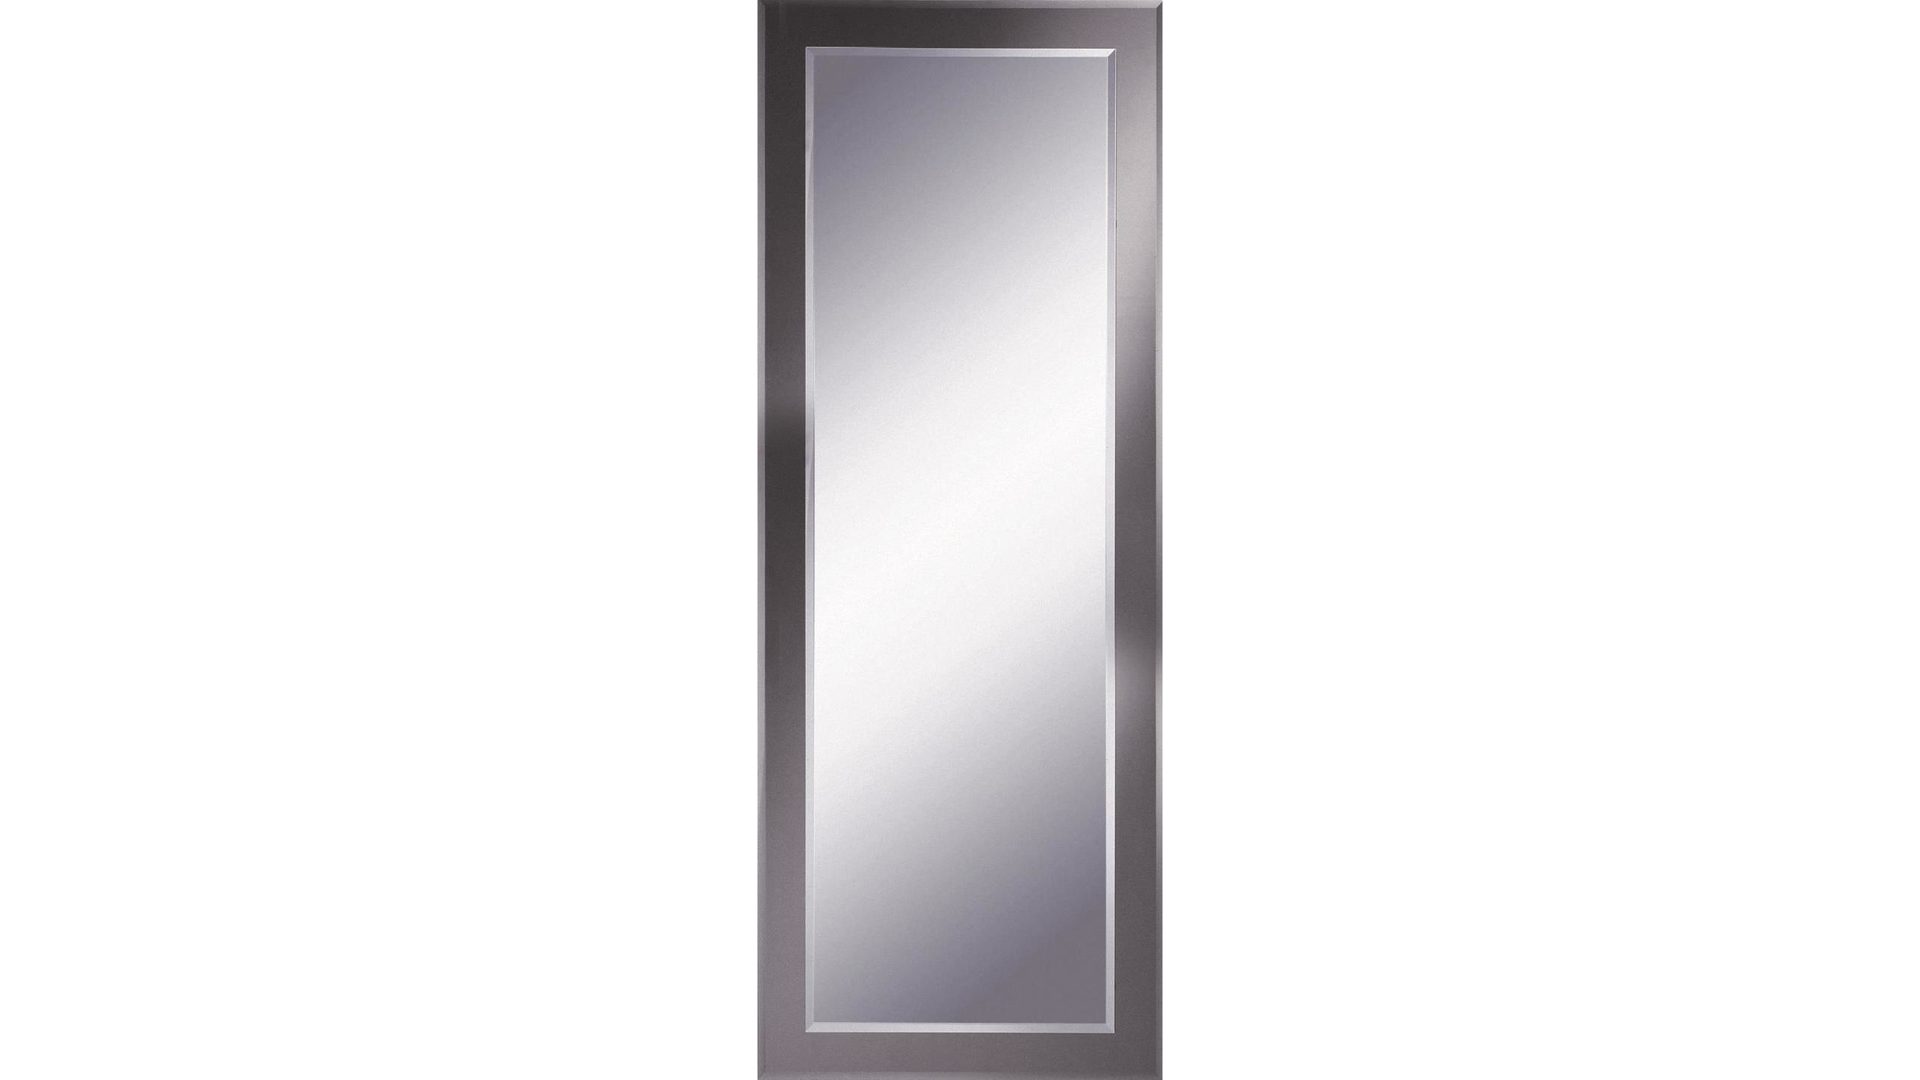 Wandspiegel Len-fra aus Kunststoff Spiegel in Schwarz LEN-FRA Wandspiegel Garderobenspiegel POITIERS 60-60160 schwarzer Kunststoffrahmen - ca. 60 x 160 cm